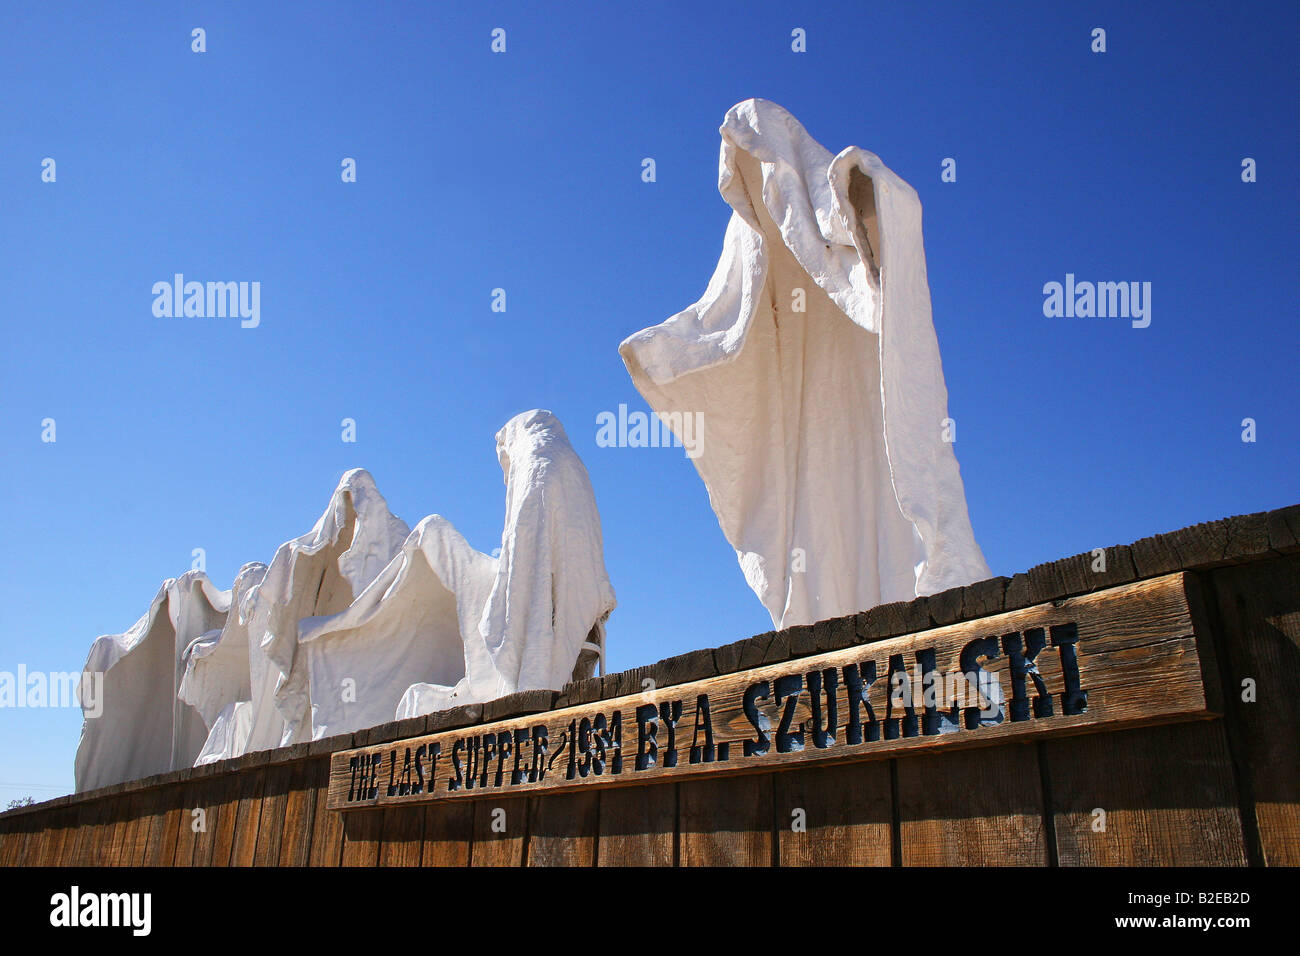 Sculture di ghost sul paesaggio, Goldwell Open Air Museum, riolite, Nevada, STATI UNITI D'AMERICA Foto Stock